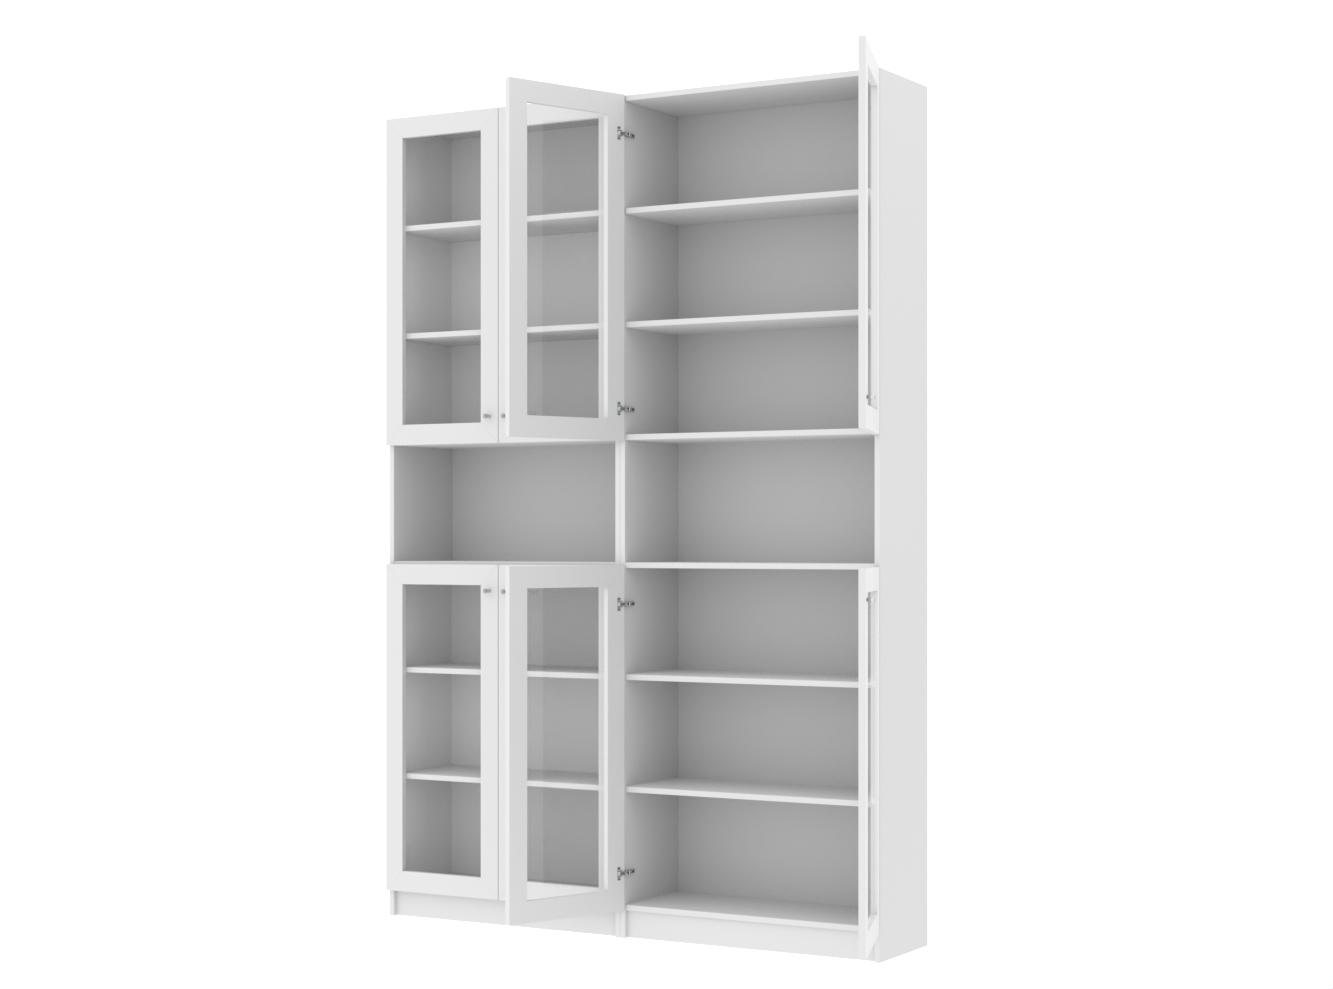  Книжный шкаф Билли 393 white ИКЕА (IKEA) изображение товара